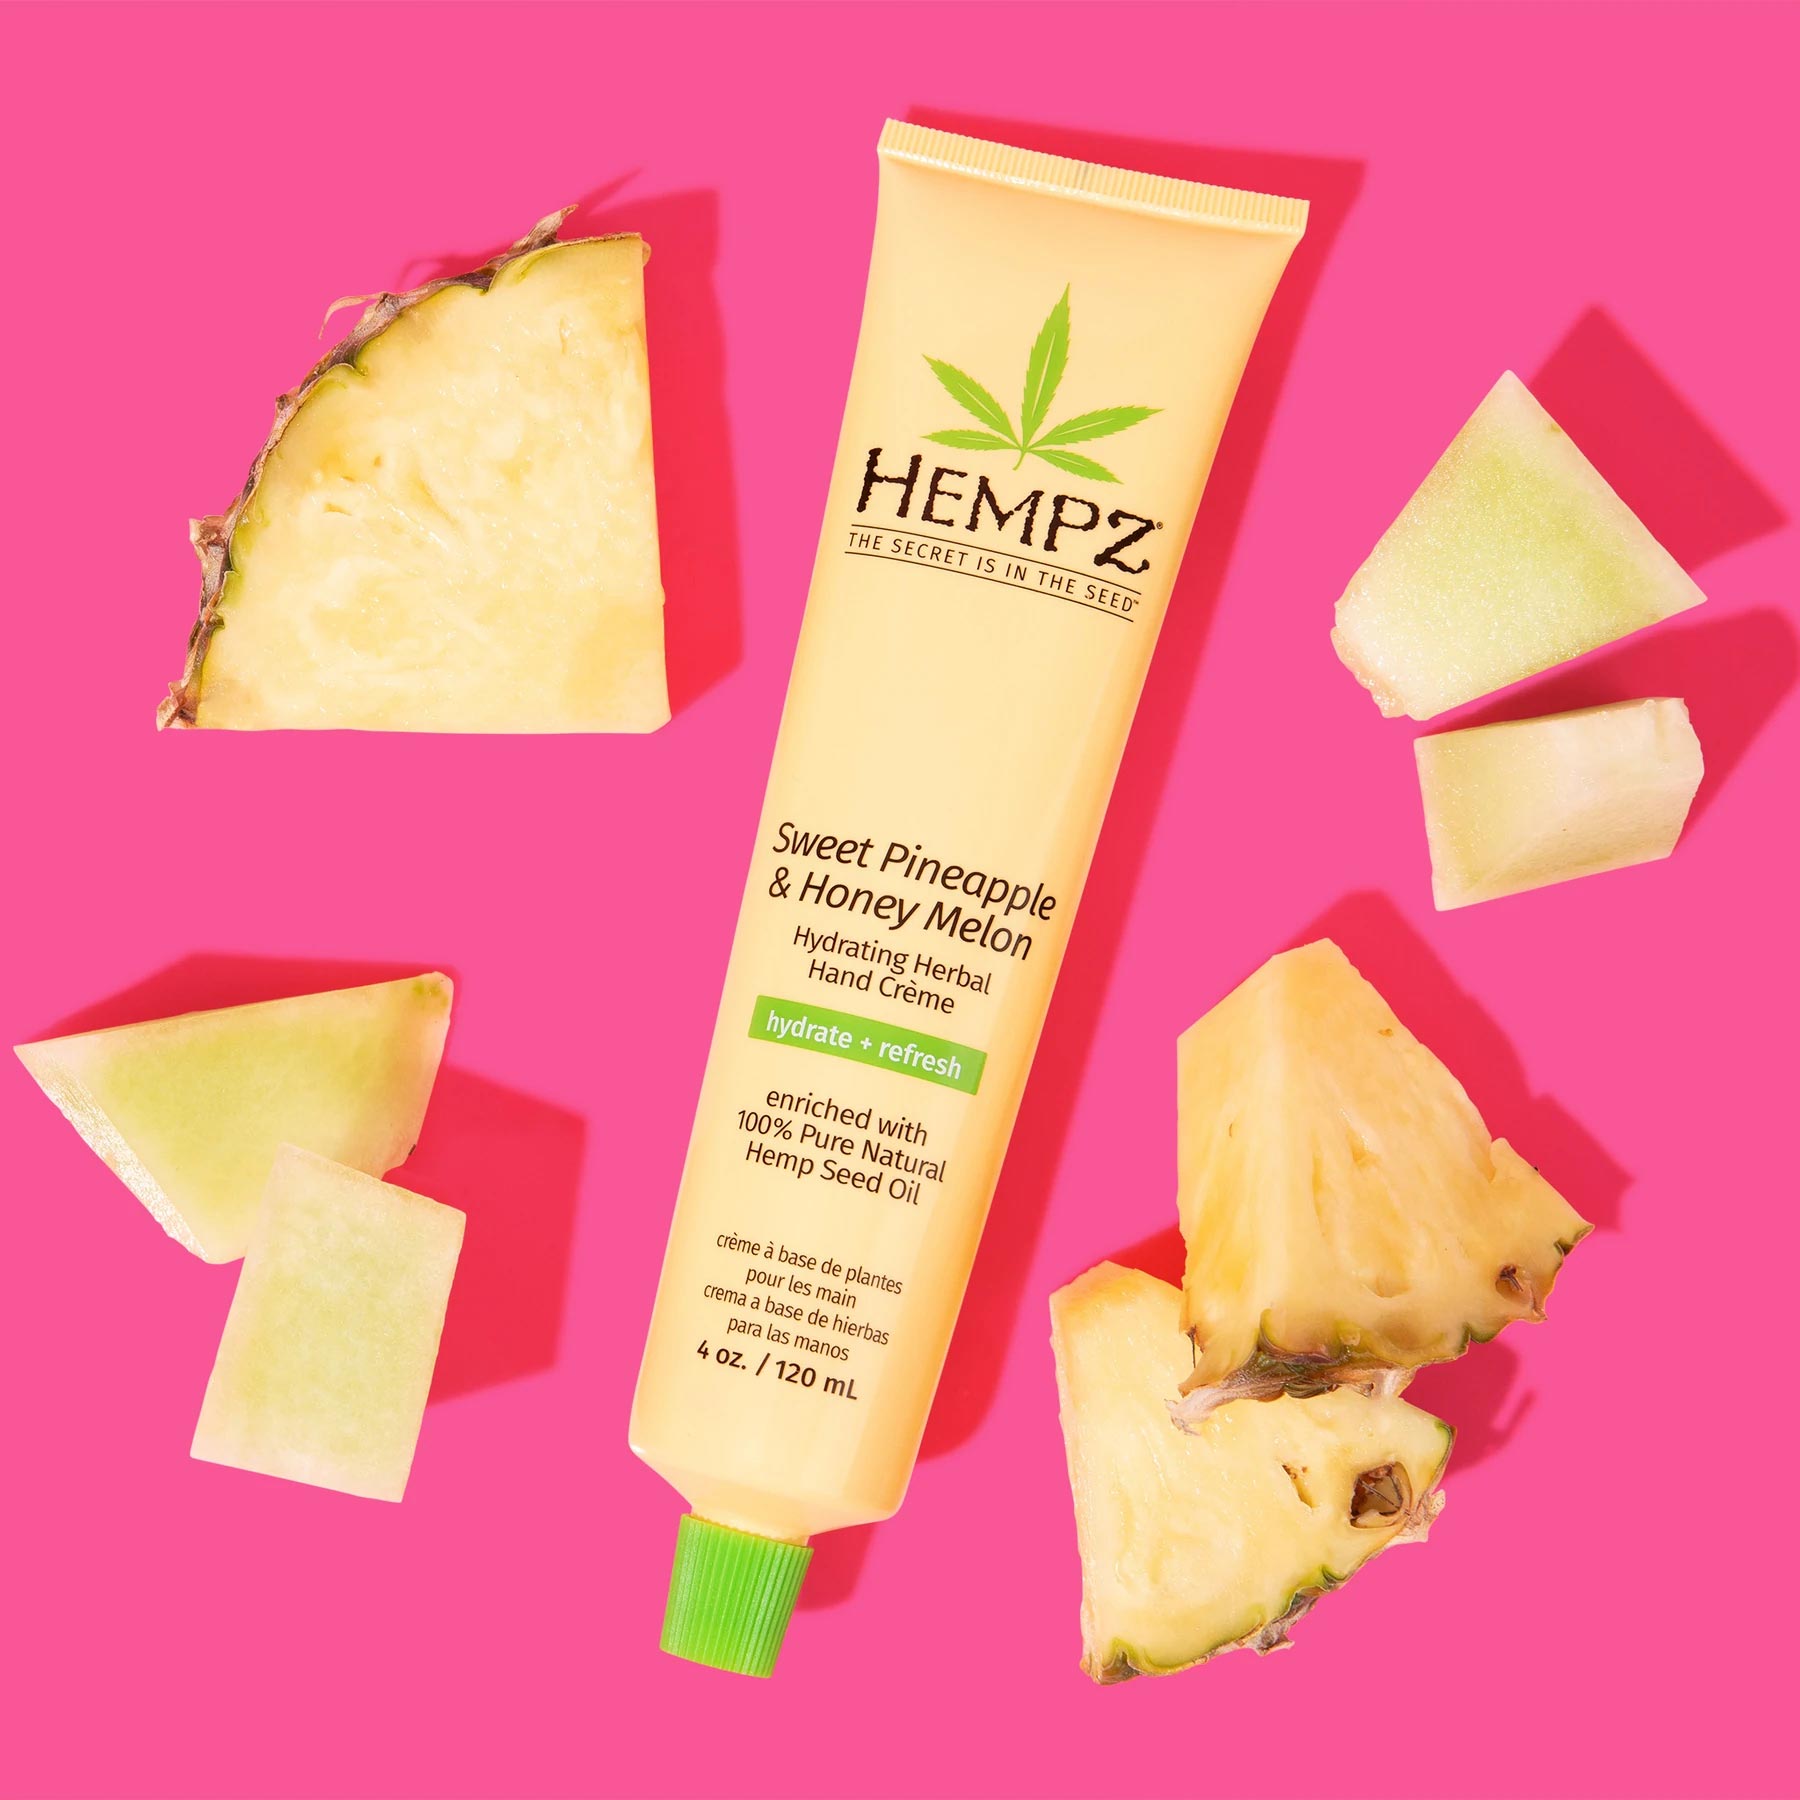 Hempz Sweet Pineapple & Honey Melon Hydrating Herbal Hand Creme